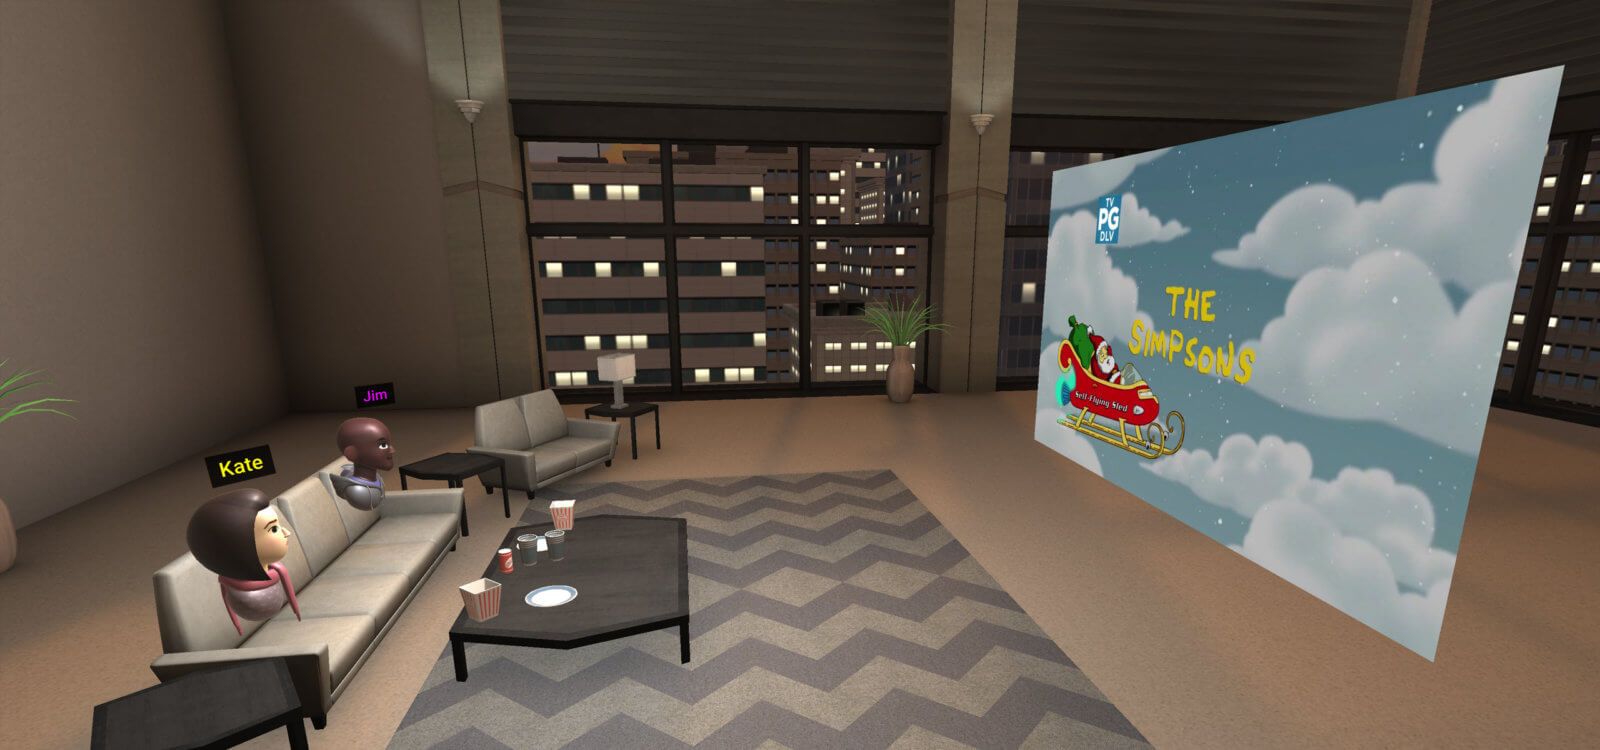 Plex แอปดูหนังผ่าน Google Daydream ที่สามารถนั่งดูและนั่งคุยกับเพื่อนได้แบบ Real-time แม้อยู่บ้านคนเดียว